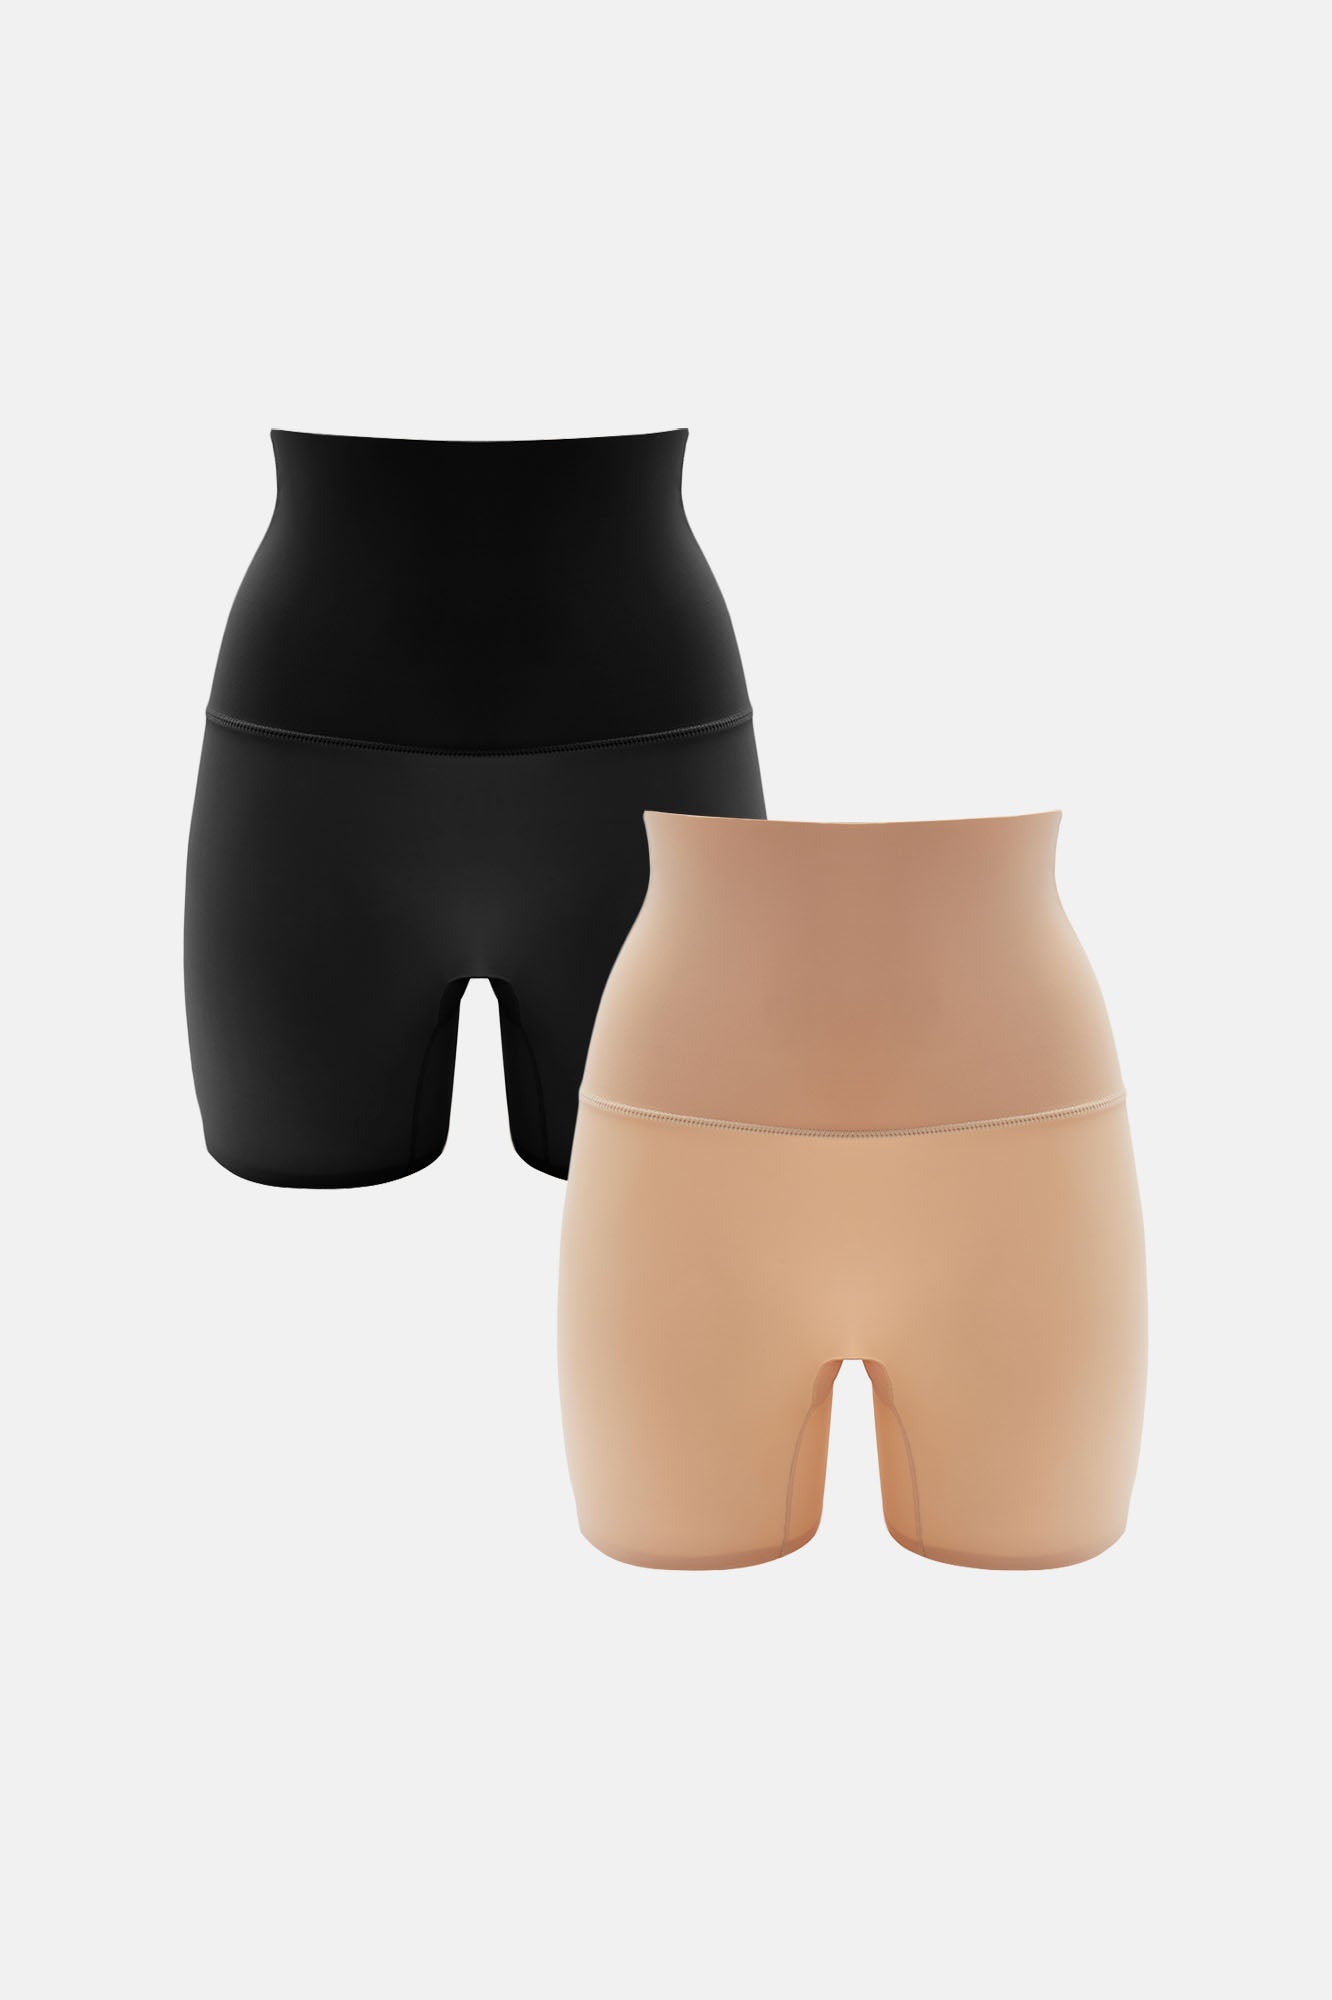 Baby Got Back Knee Length High Compression Premium Sculpting Shorts - Nude, Fashion Nova, Lingerie & Sleepwear